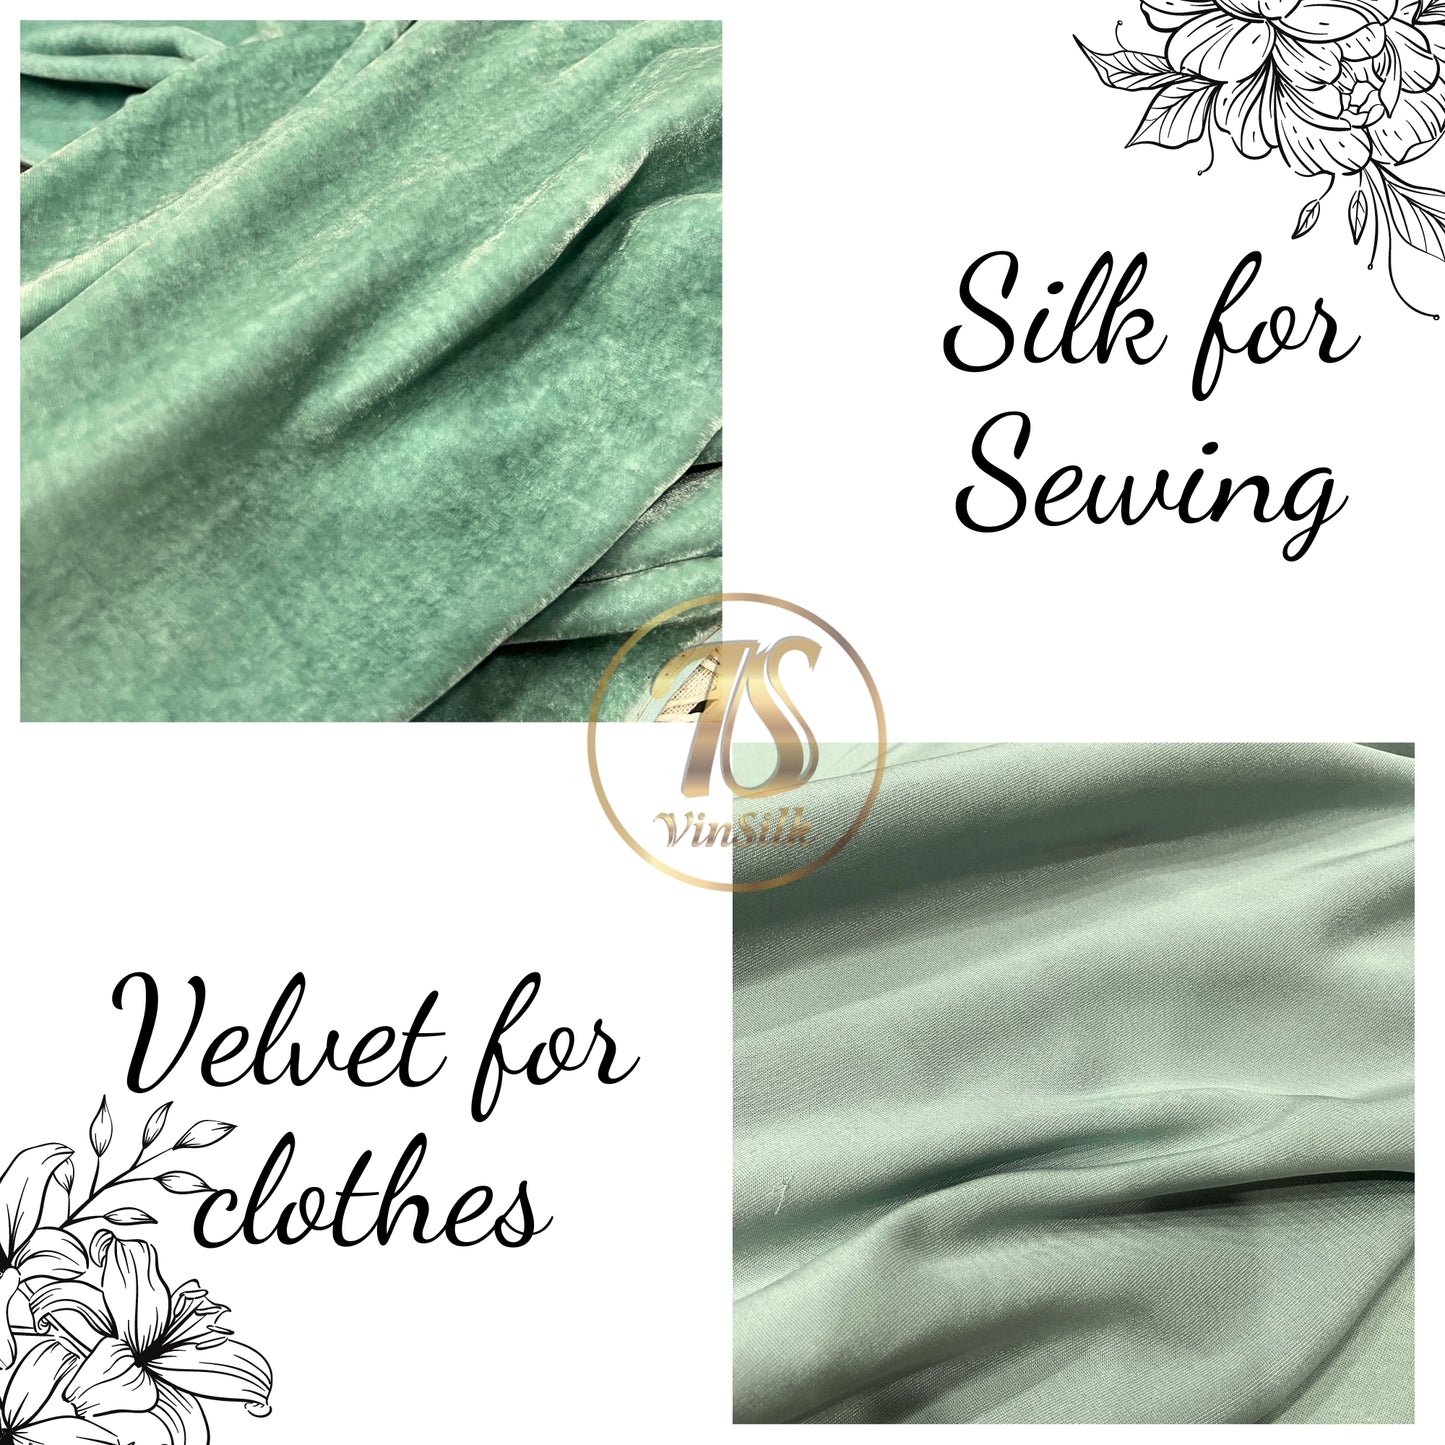 100% Pure Mulberry Silk Velvet Fabric - Luxury Silk Velvet - Silk for sewing - Silk apparel fabric